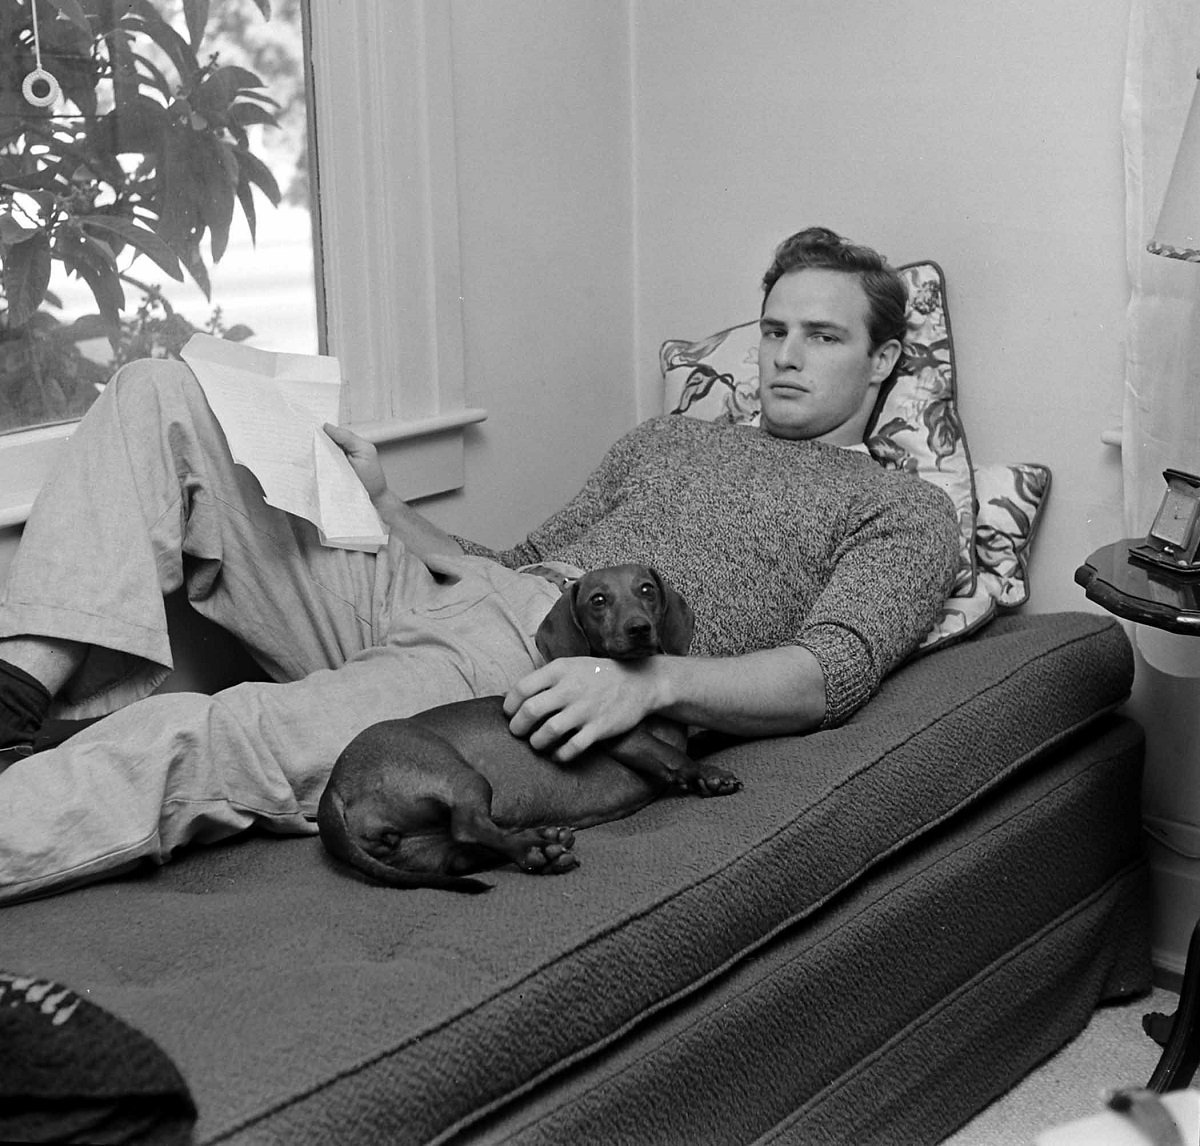 Marlon Brando with his dog in 1949